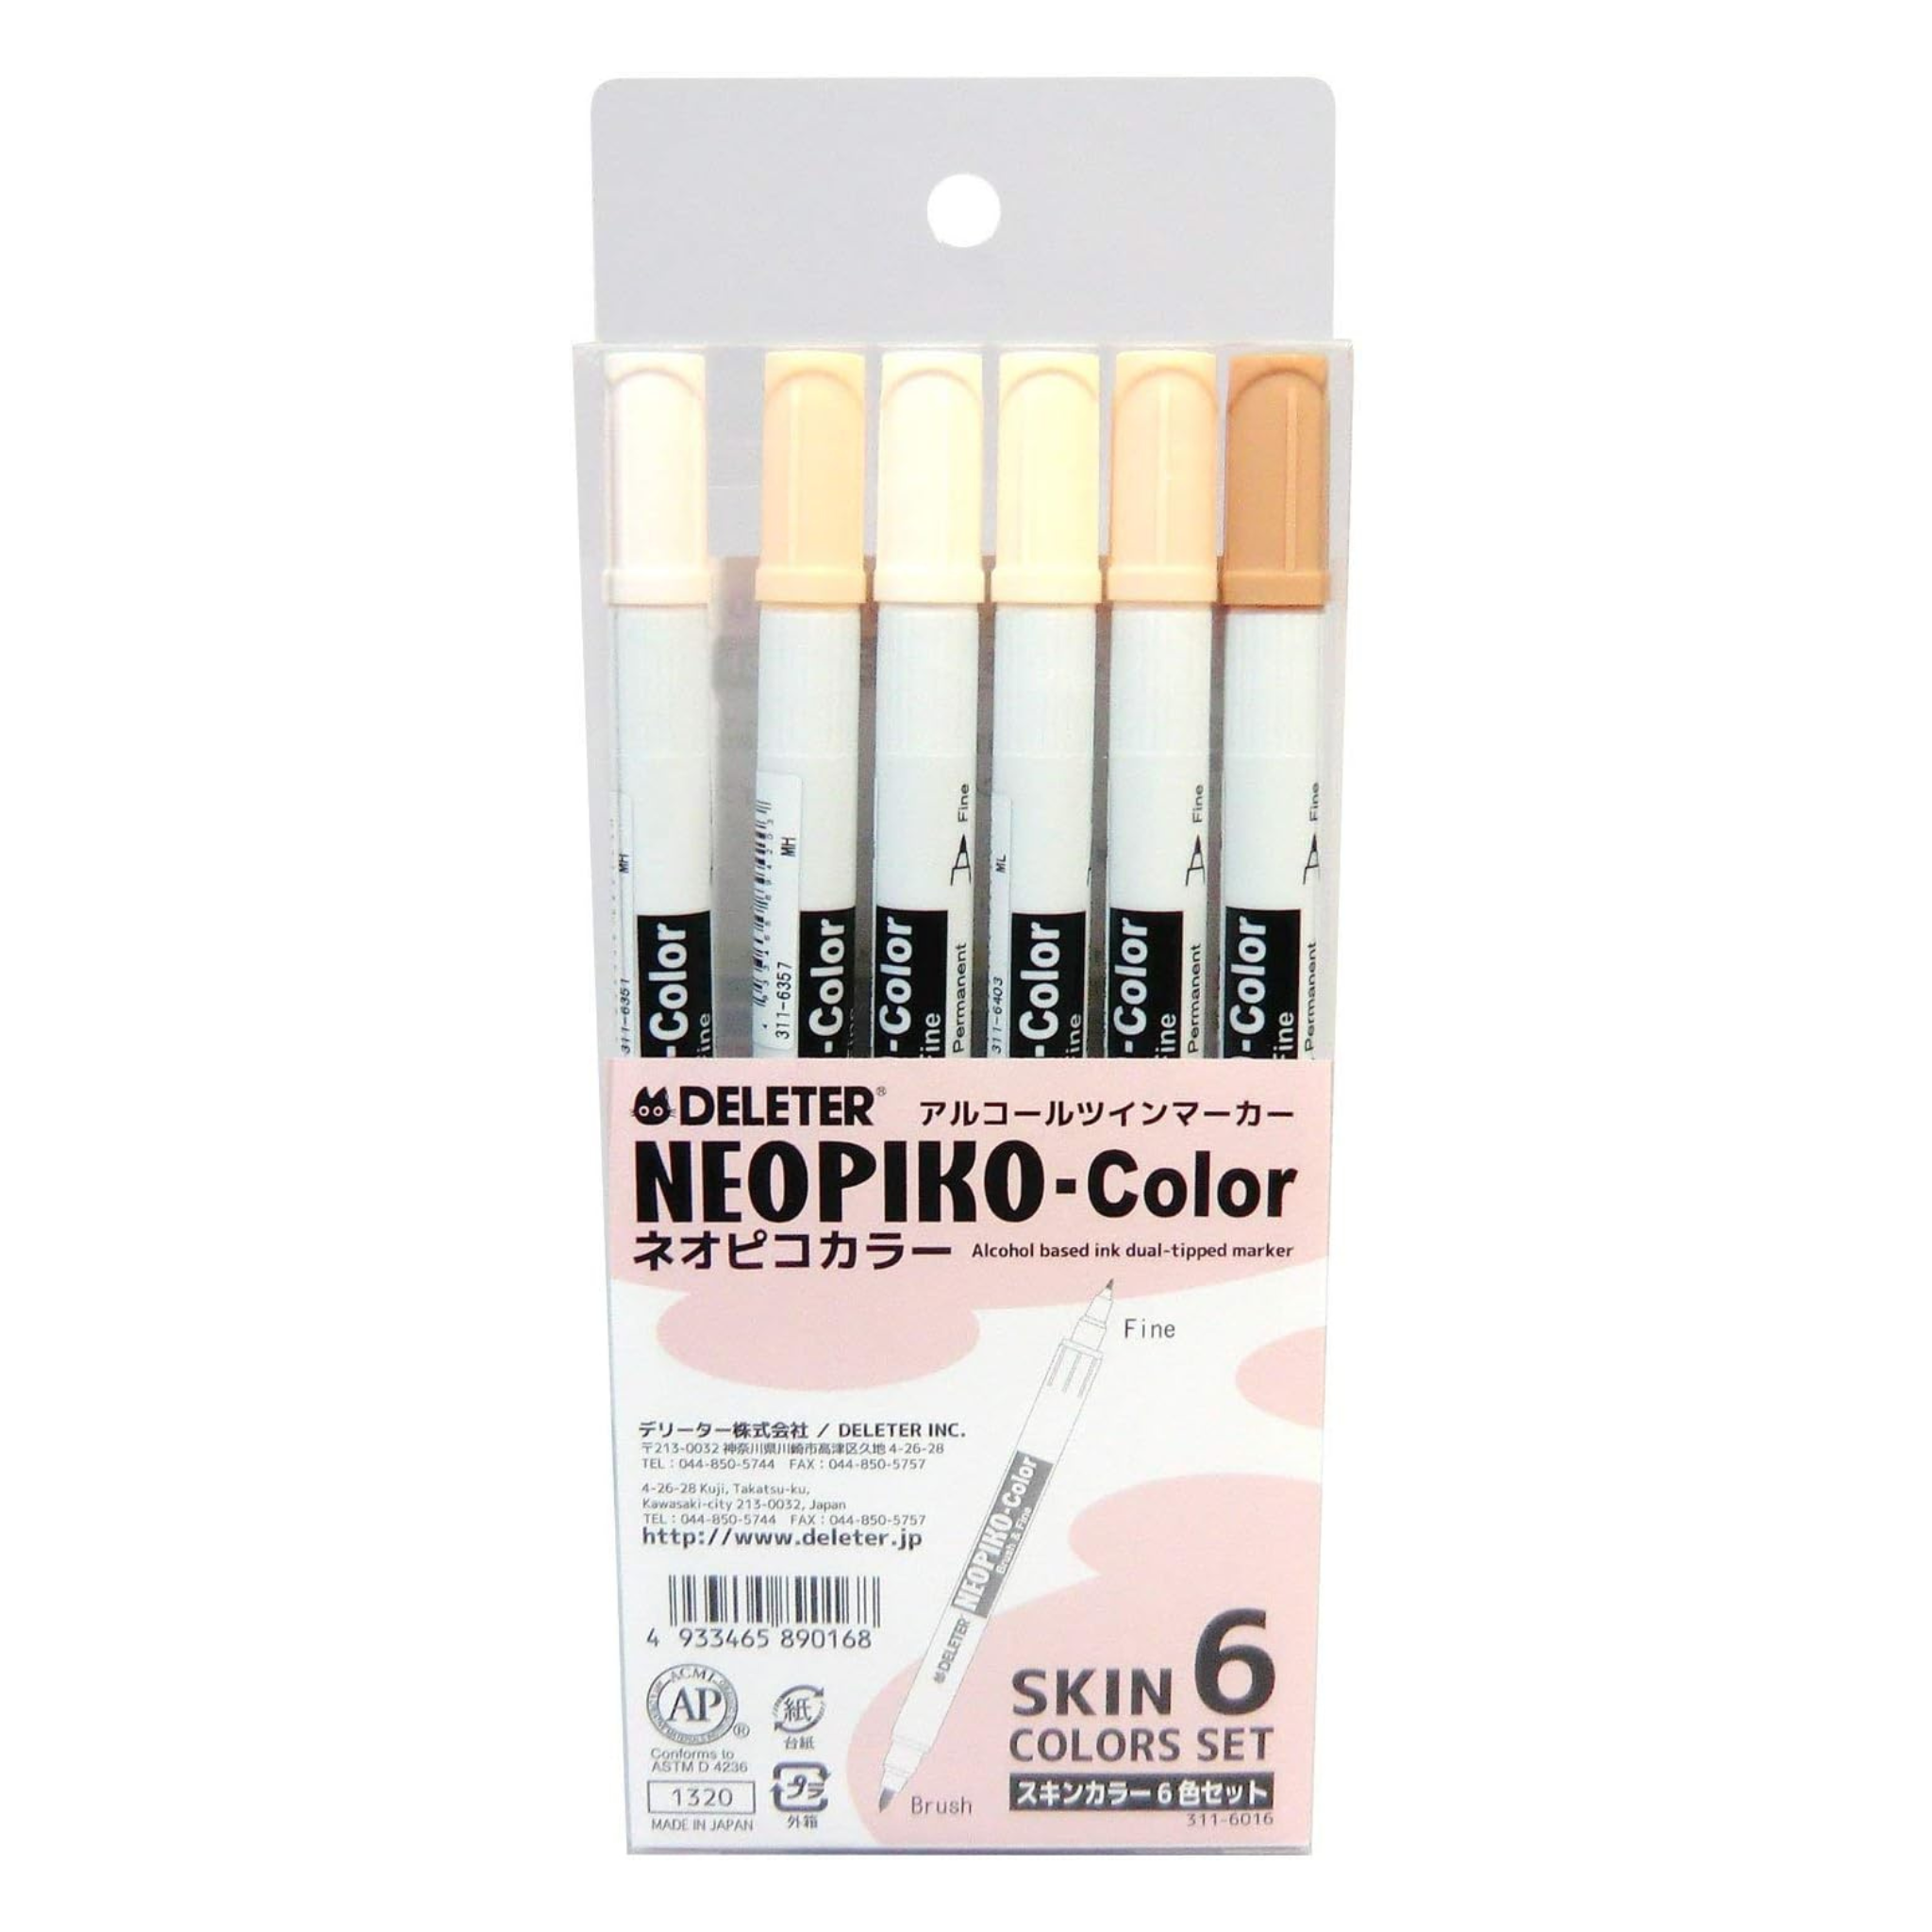 DELETER Neopiko Color, Skin 6 colors set